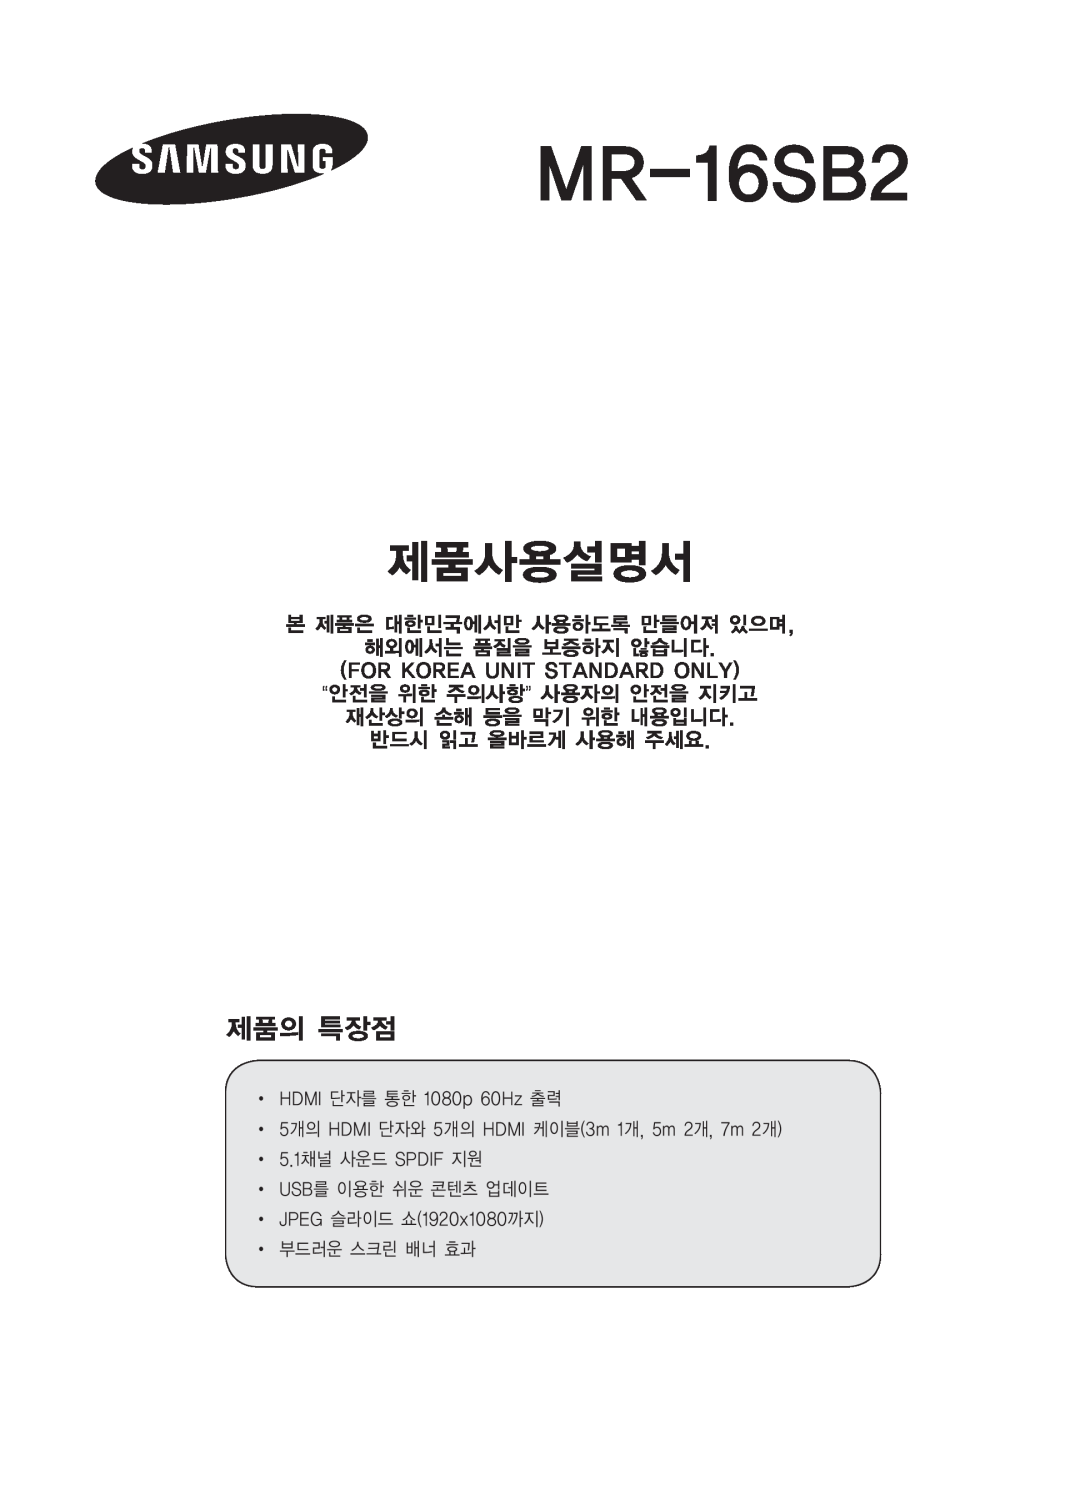 Samsung MR-16SB2 manual 제품의 특장점, 본 제품은 대한민국에서만 사용하도록 만들어져 있으며 해외에서는 품질을 보증하지 않습니다, 제품사용설명서 